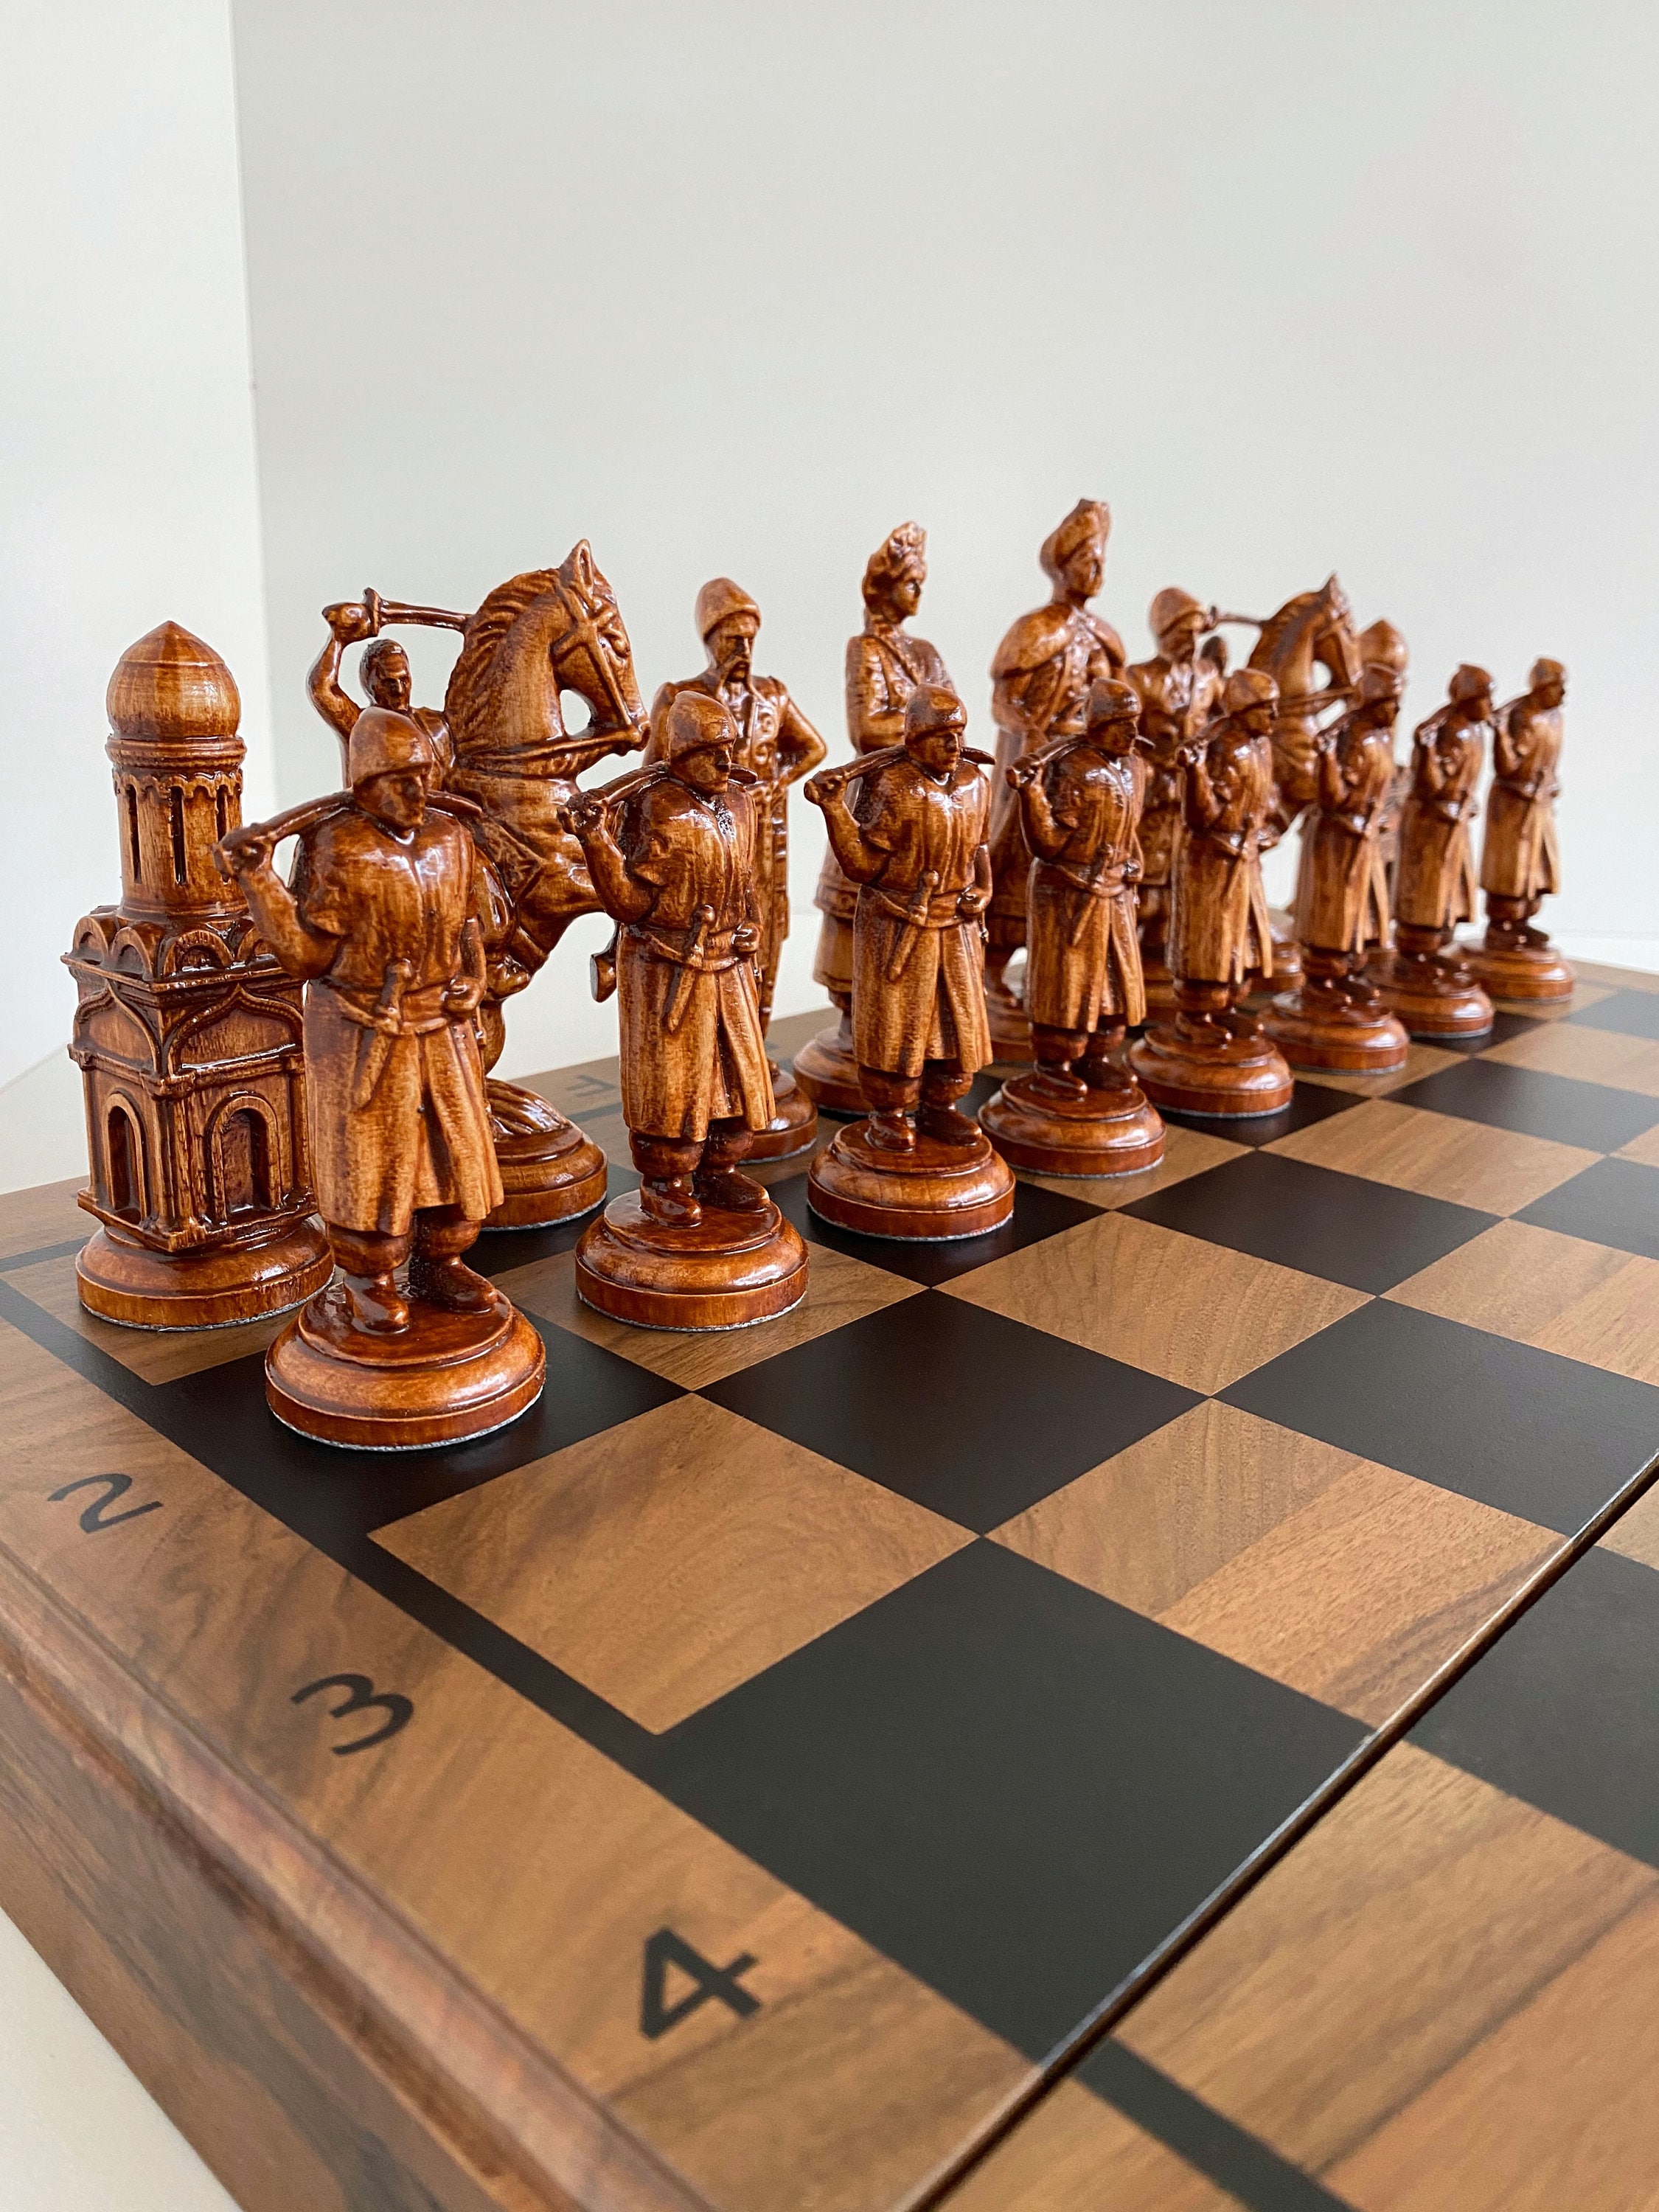 Old English Classic Chess Set with Padauk & Boxwood Pieces - 3.9